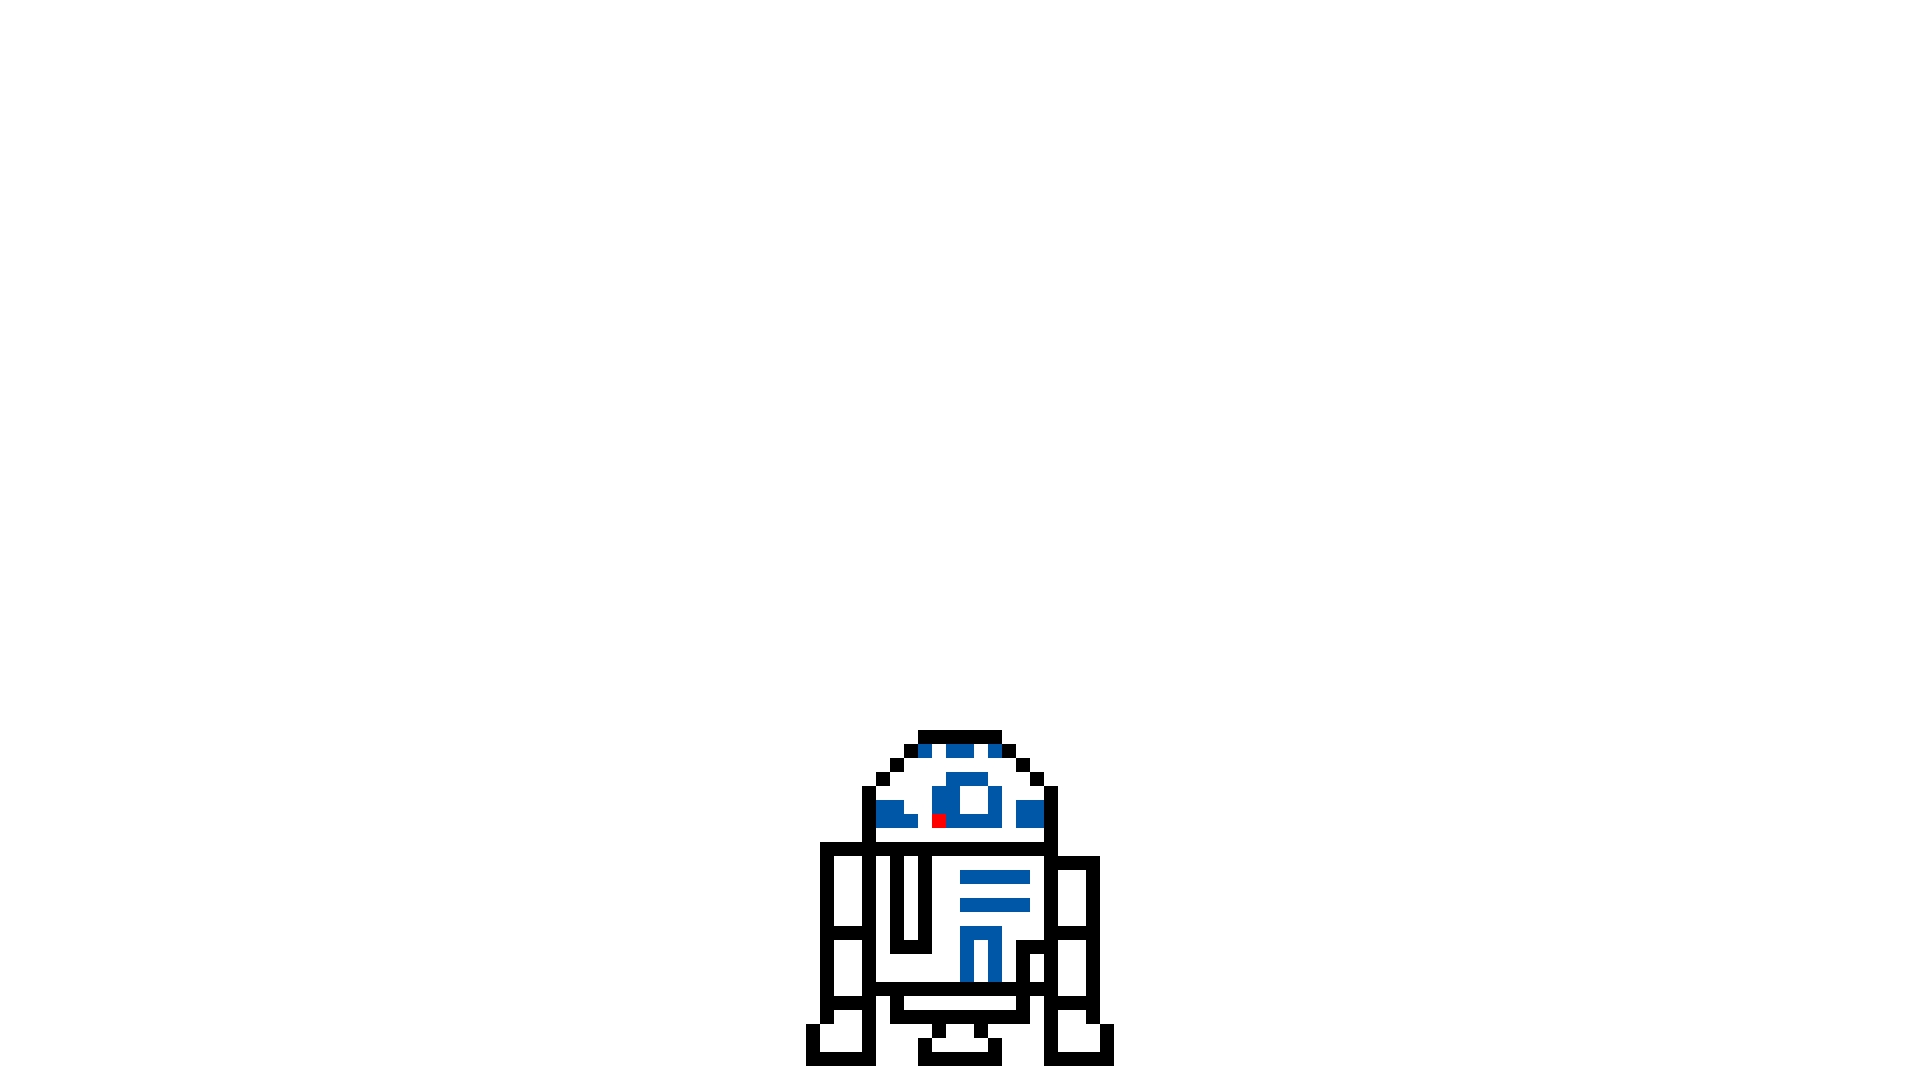 Wallpaper R2-D2, star wars, pixel art